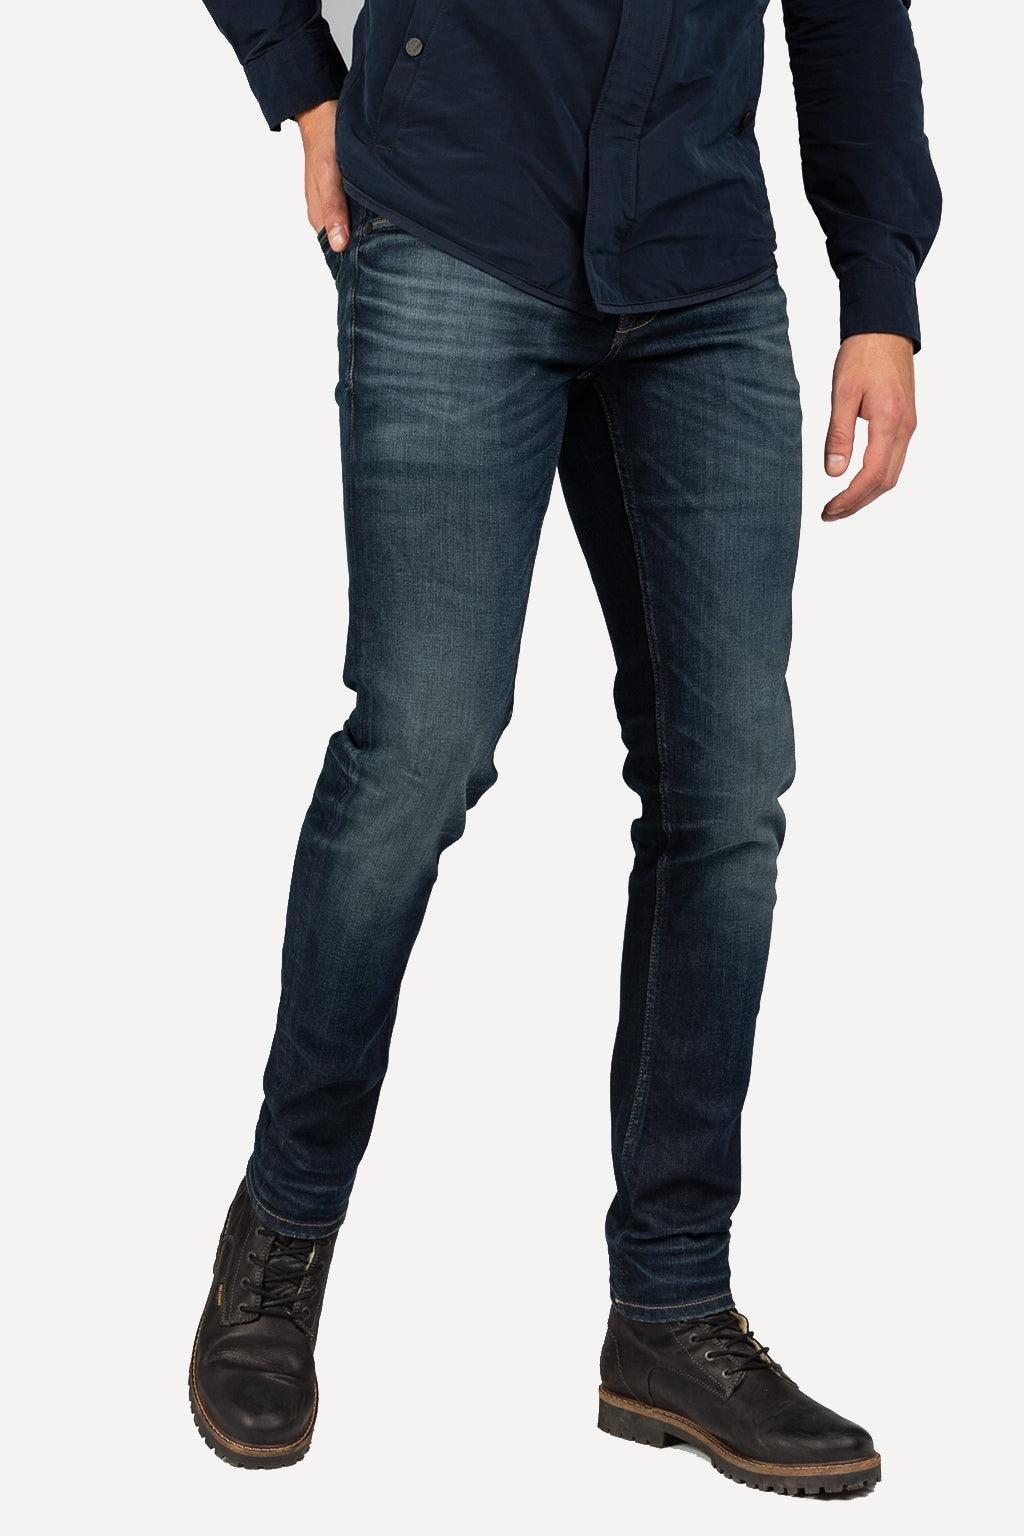 PME Legend jeans |  Big Boss | the menswear concept.